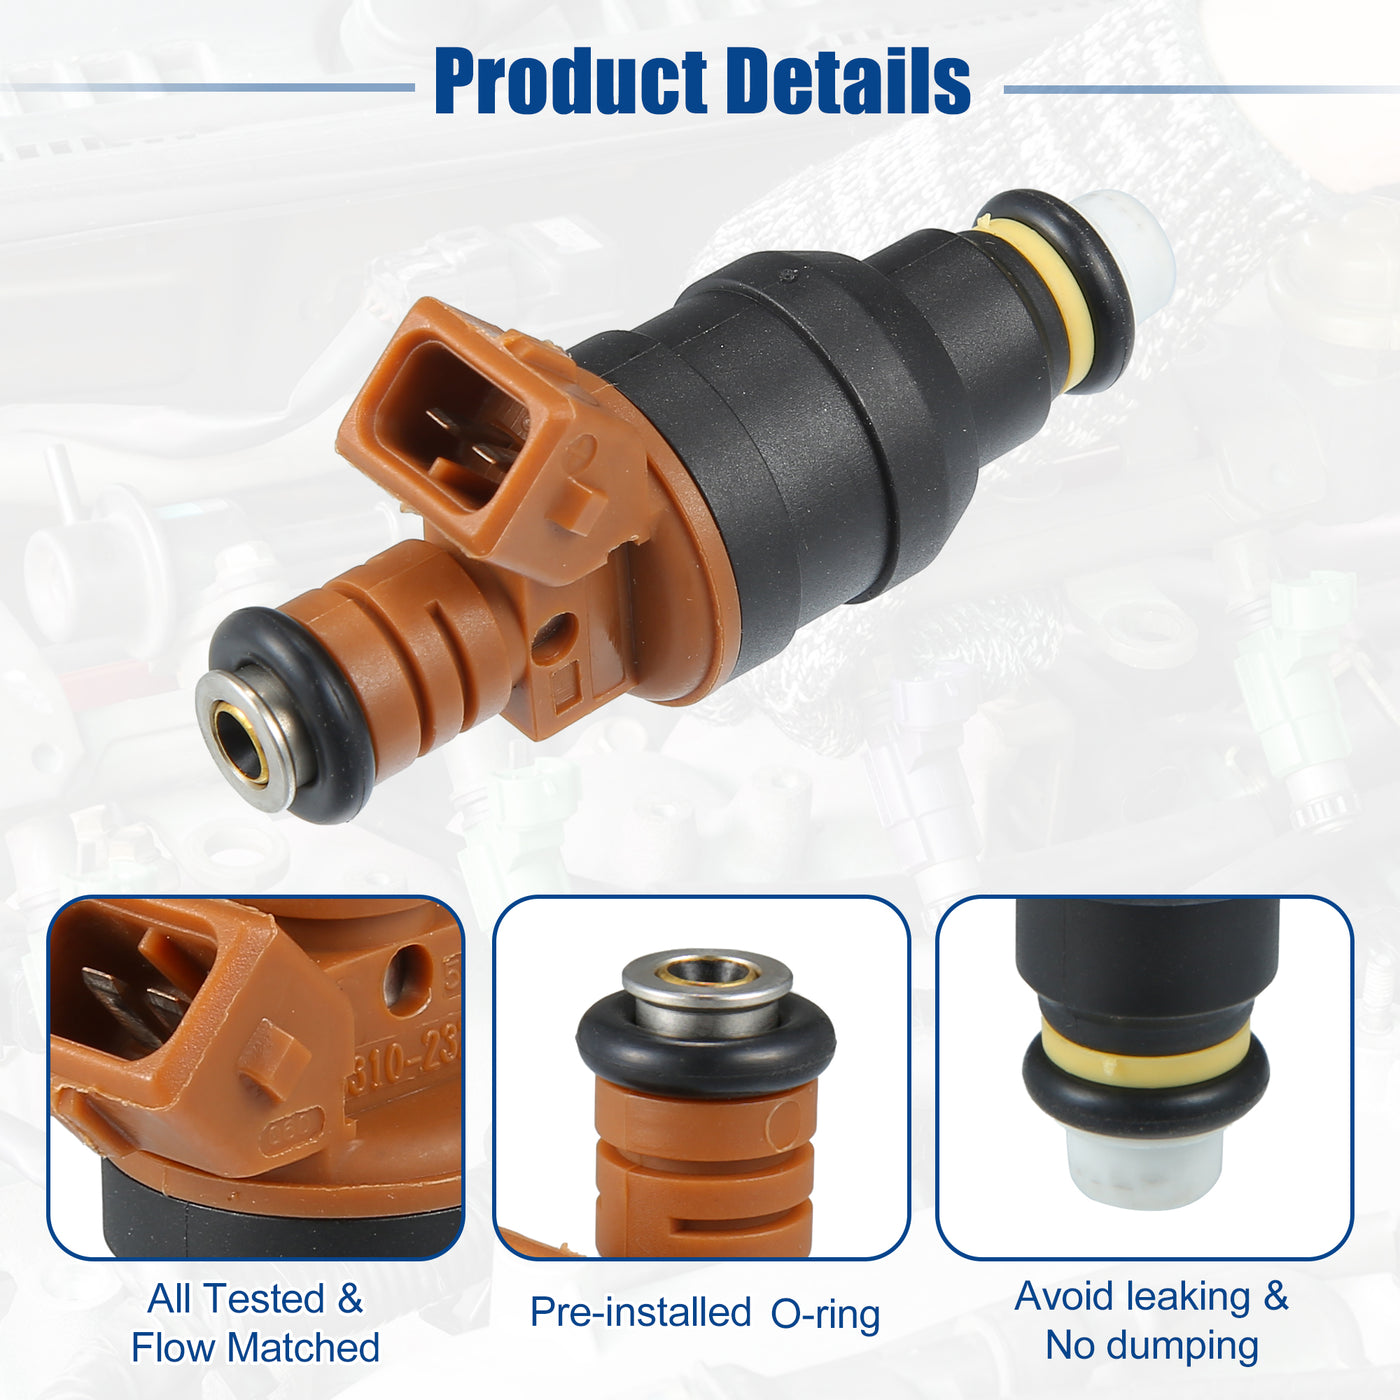 ACROPIX Car Fuel Injector Nozzle Replacement Fit for Hyundai Elantra 2.0L 1999-2001 No.35310-23210 - Pack of 1